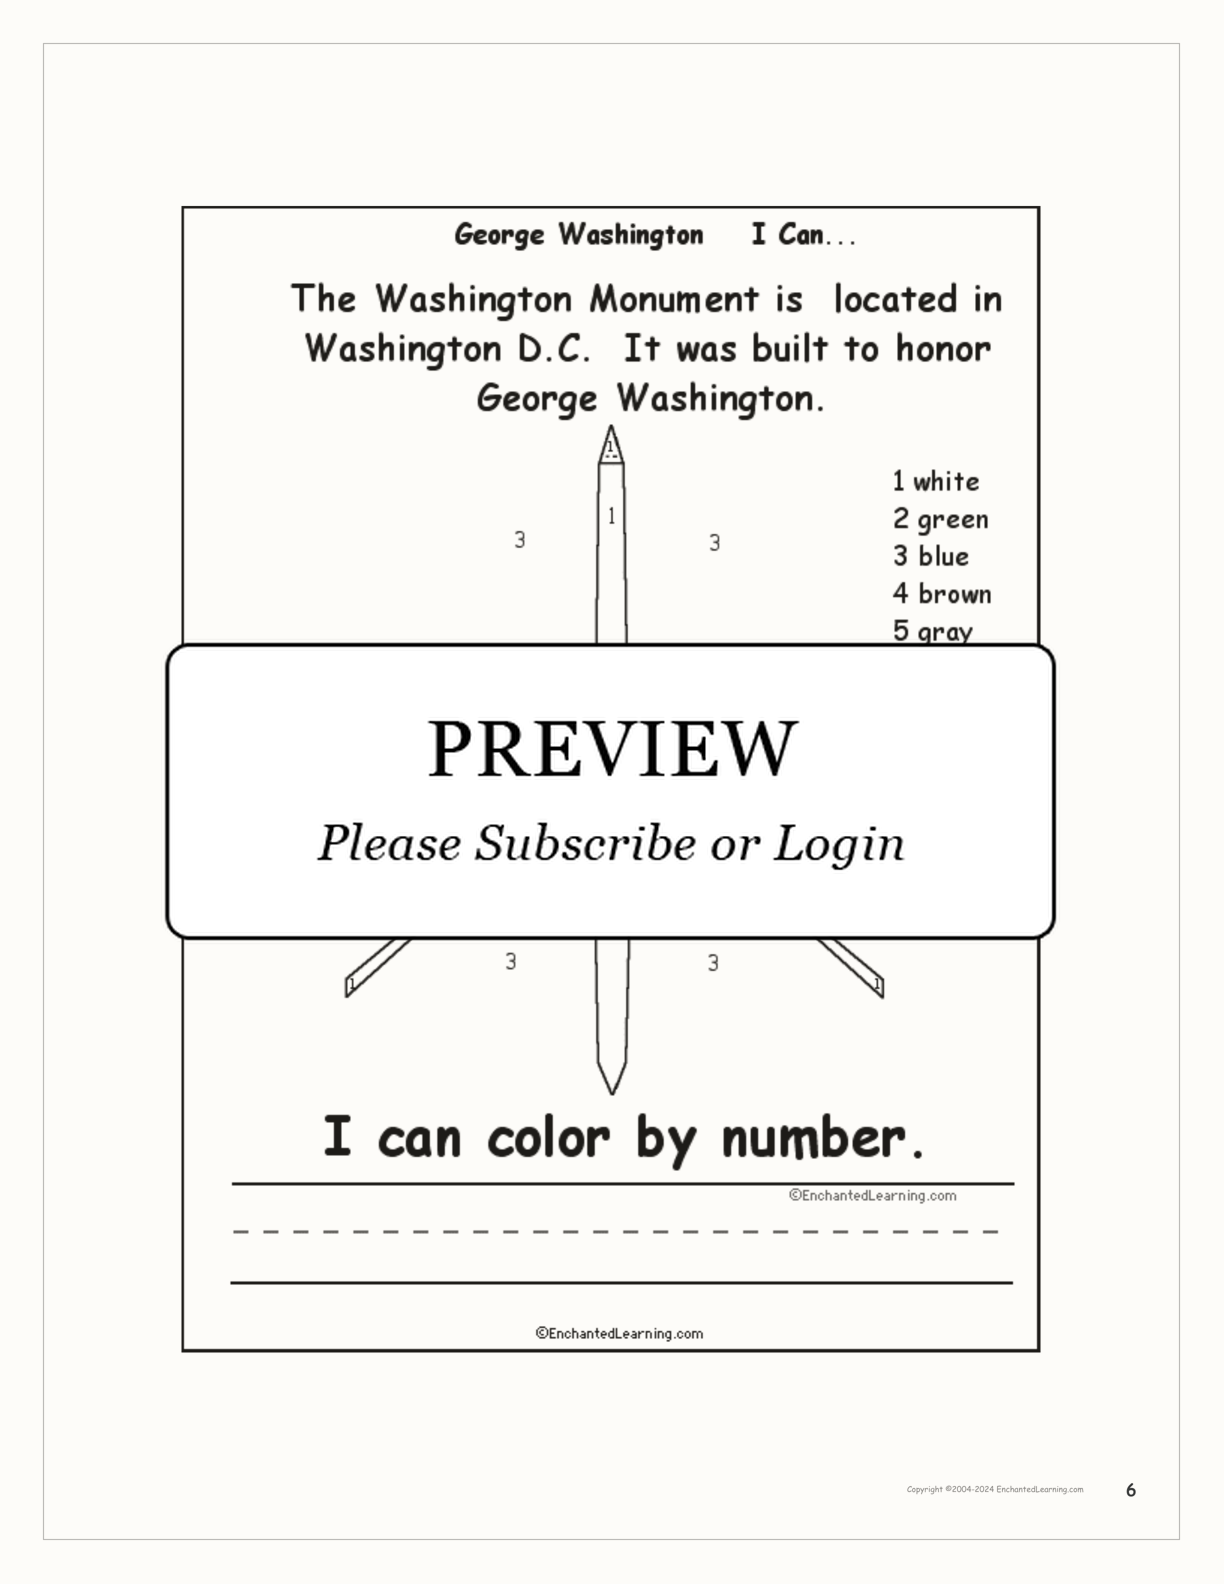 George Washington, I Can... interactive worksheet page 6